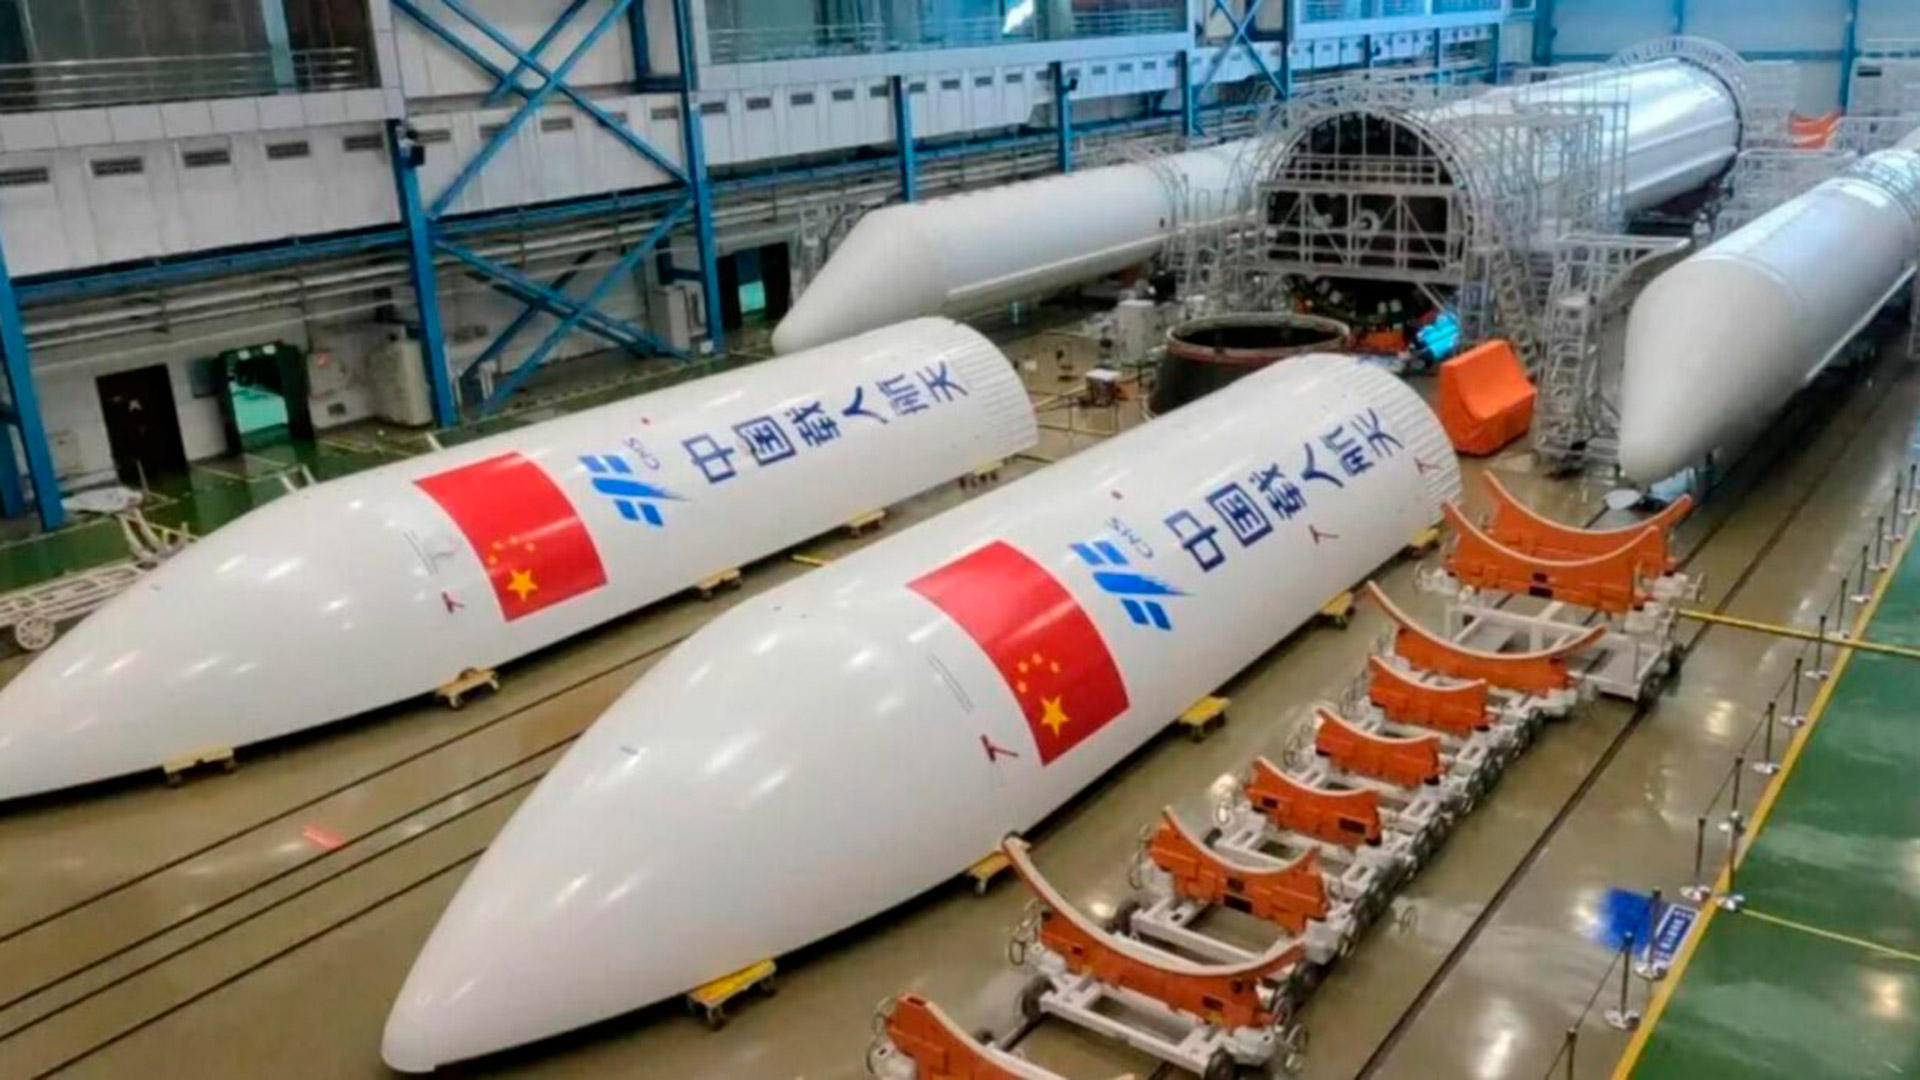 El cohete chino en pleno armado